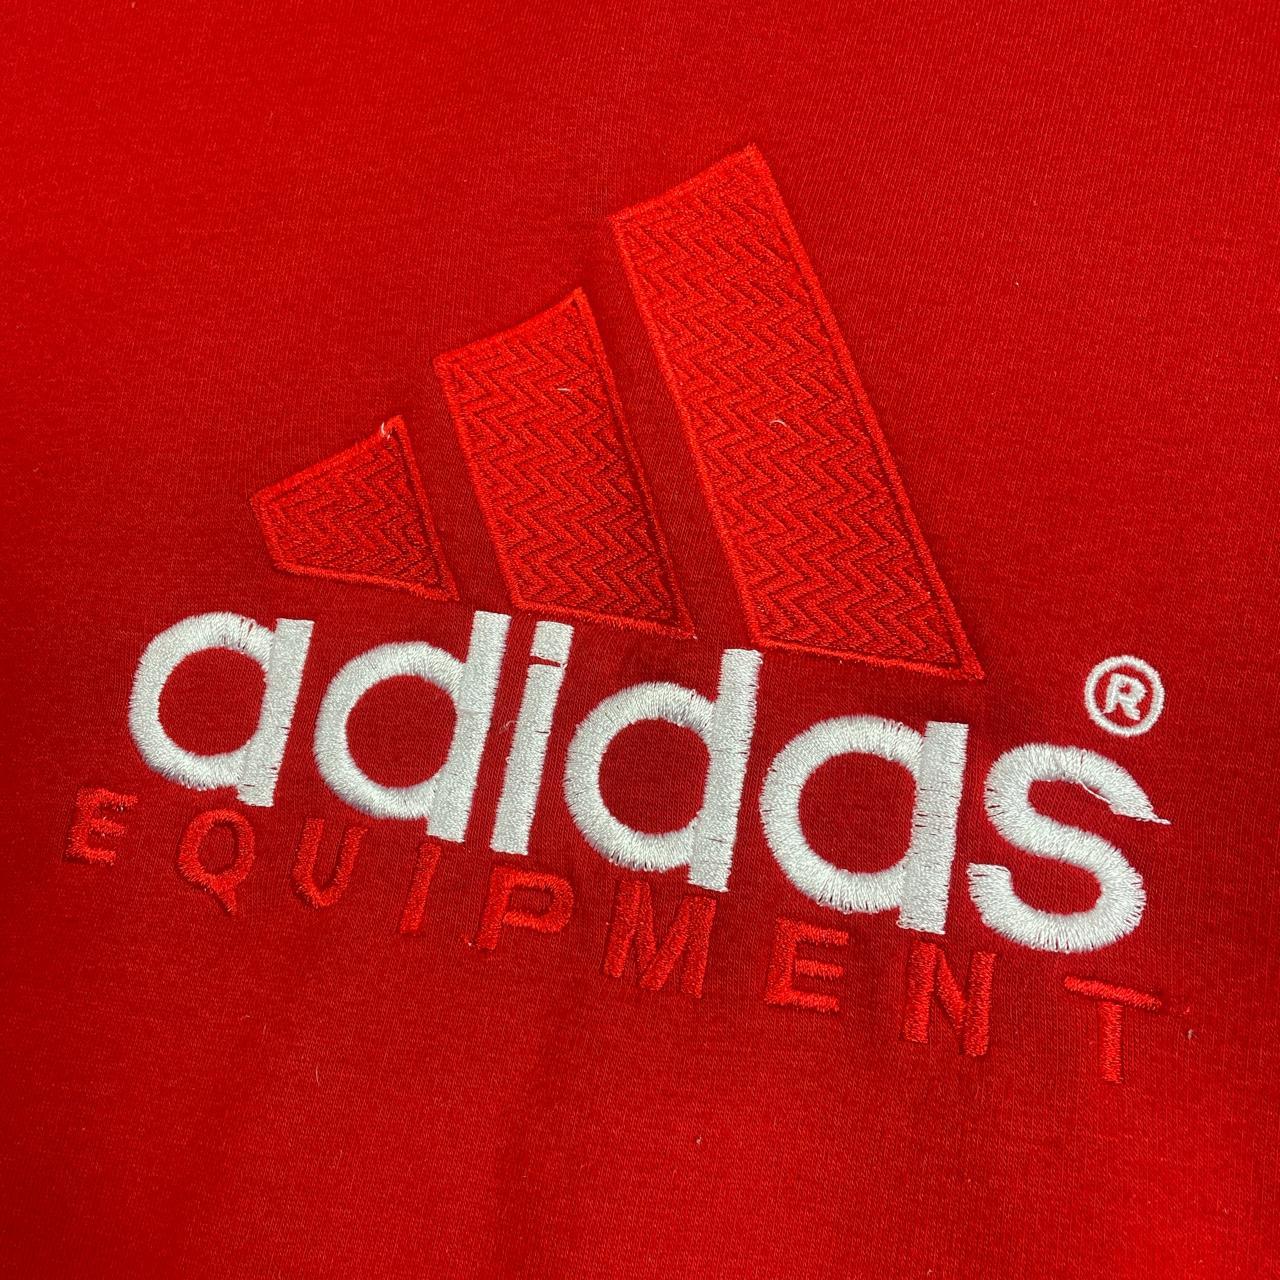 Vintage Adidas Equipment Embroidered Red Sweatshirt